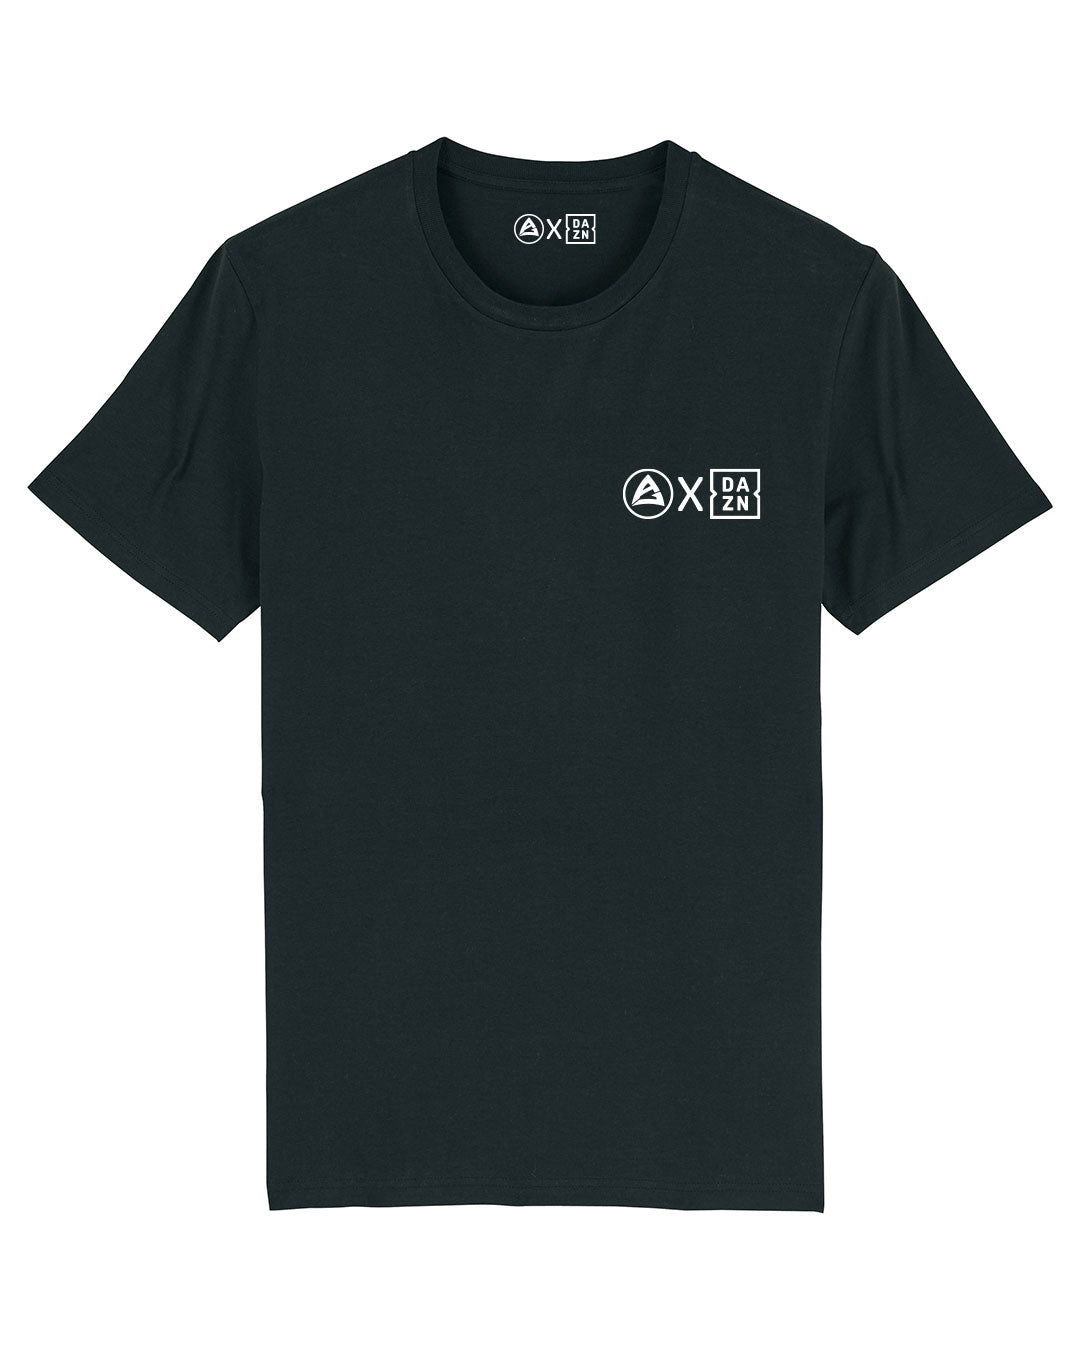 AJ x DAZN T-Shirt - Black